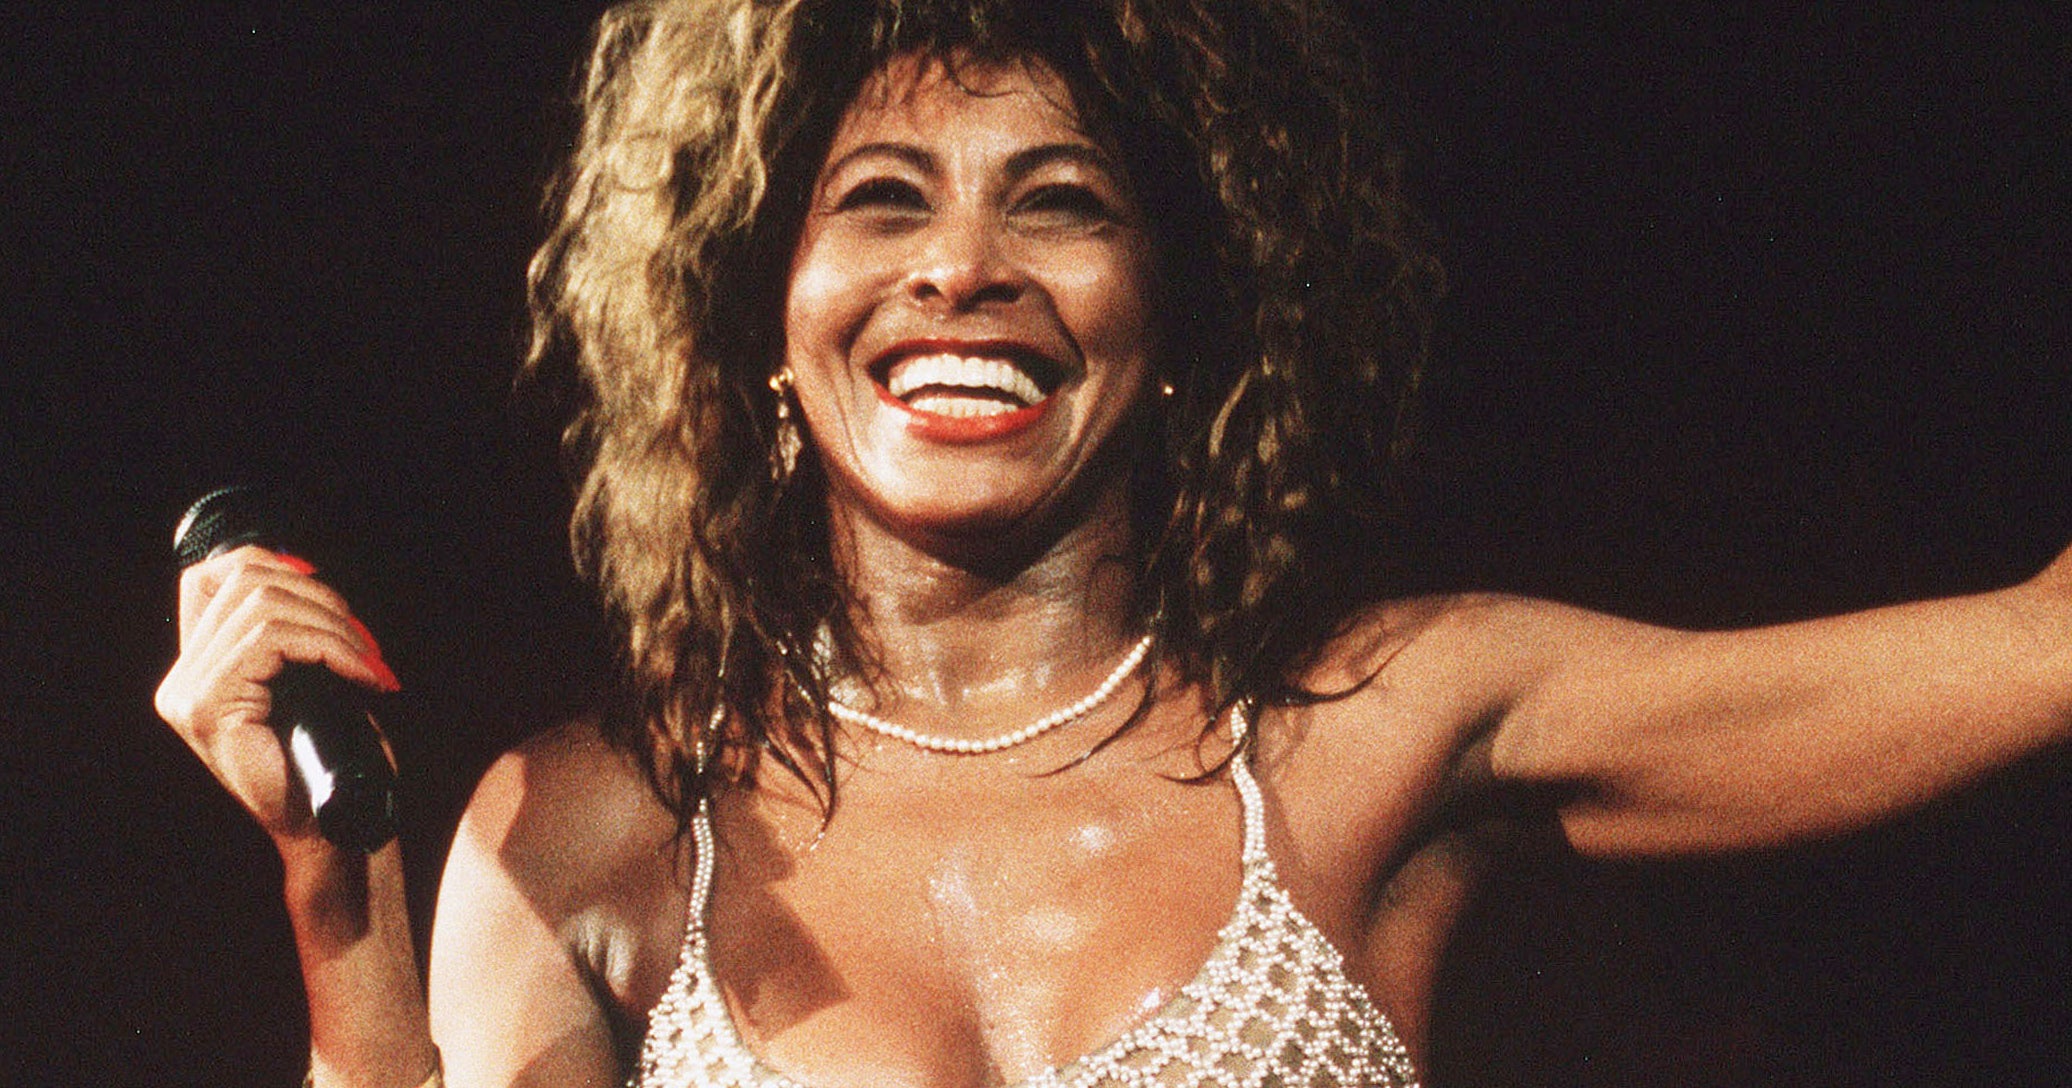 HBO Shares Trailer For Tina Turner Music Documentary